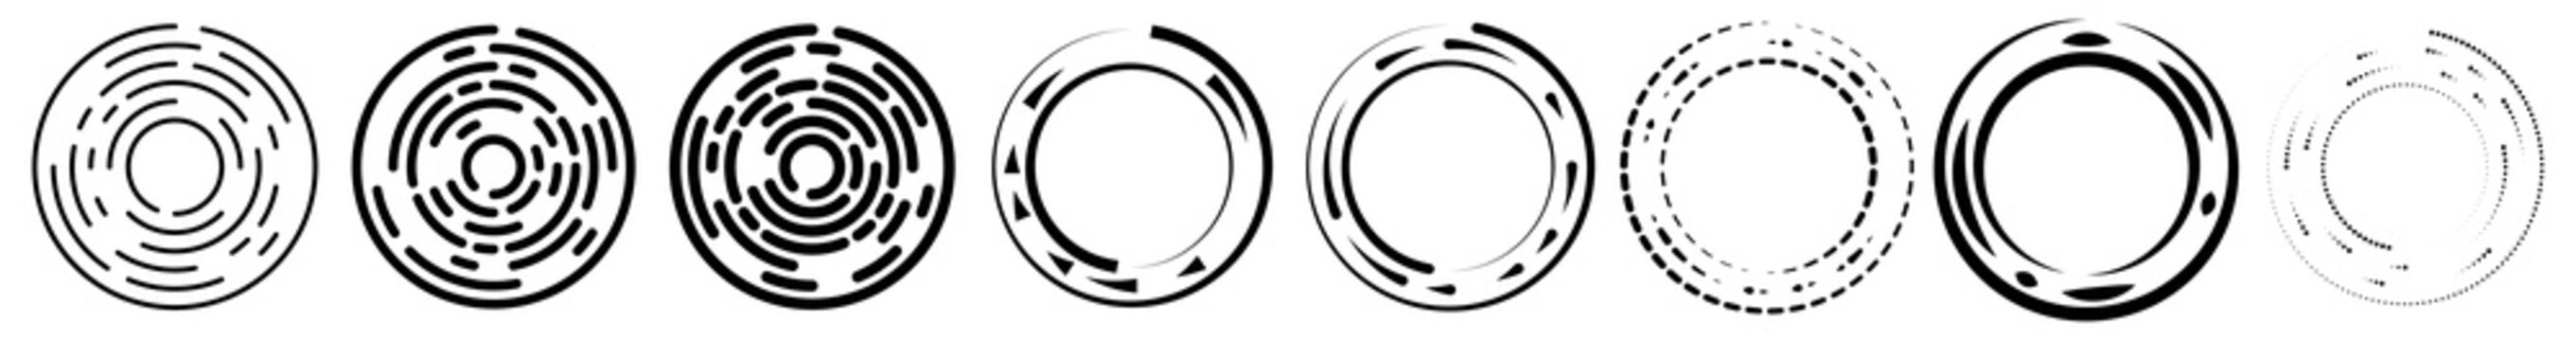 Circular, concentric segmented circles, rings. Abstract geometric circle. Spiral, swirl, twirl. Random rotation circles